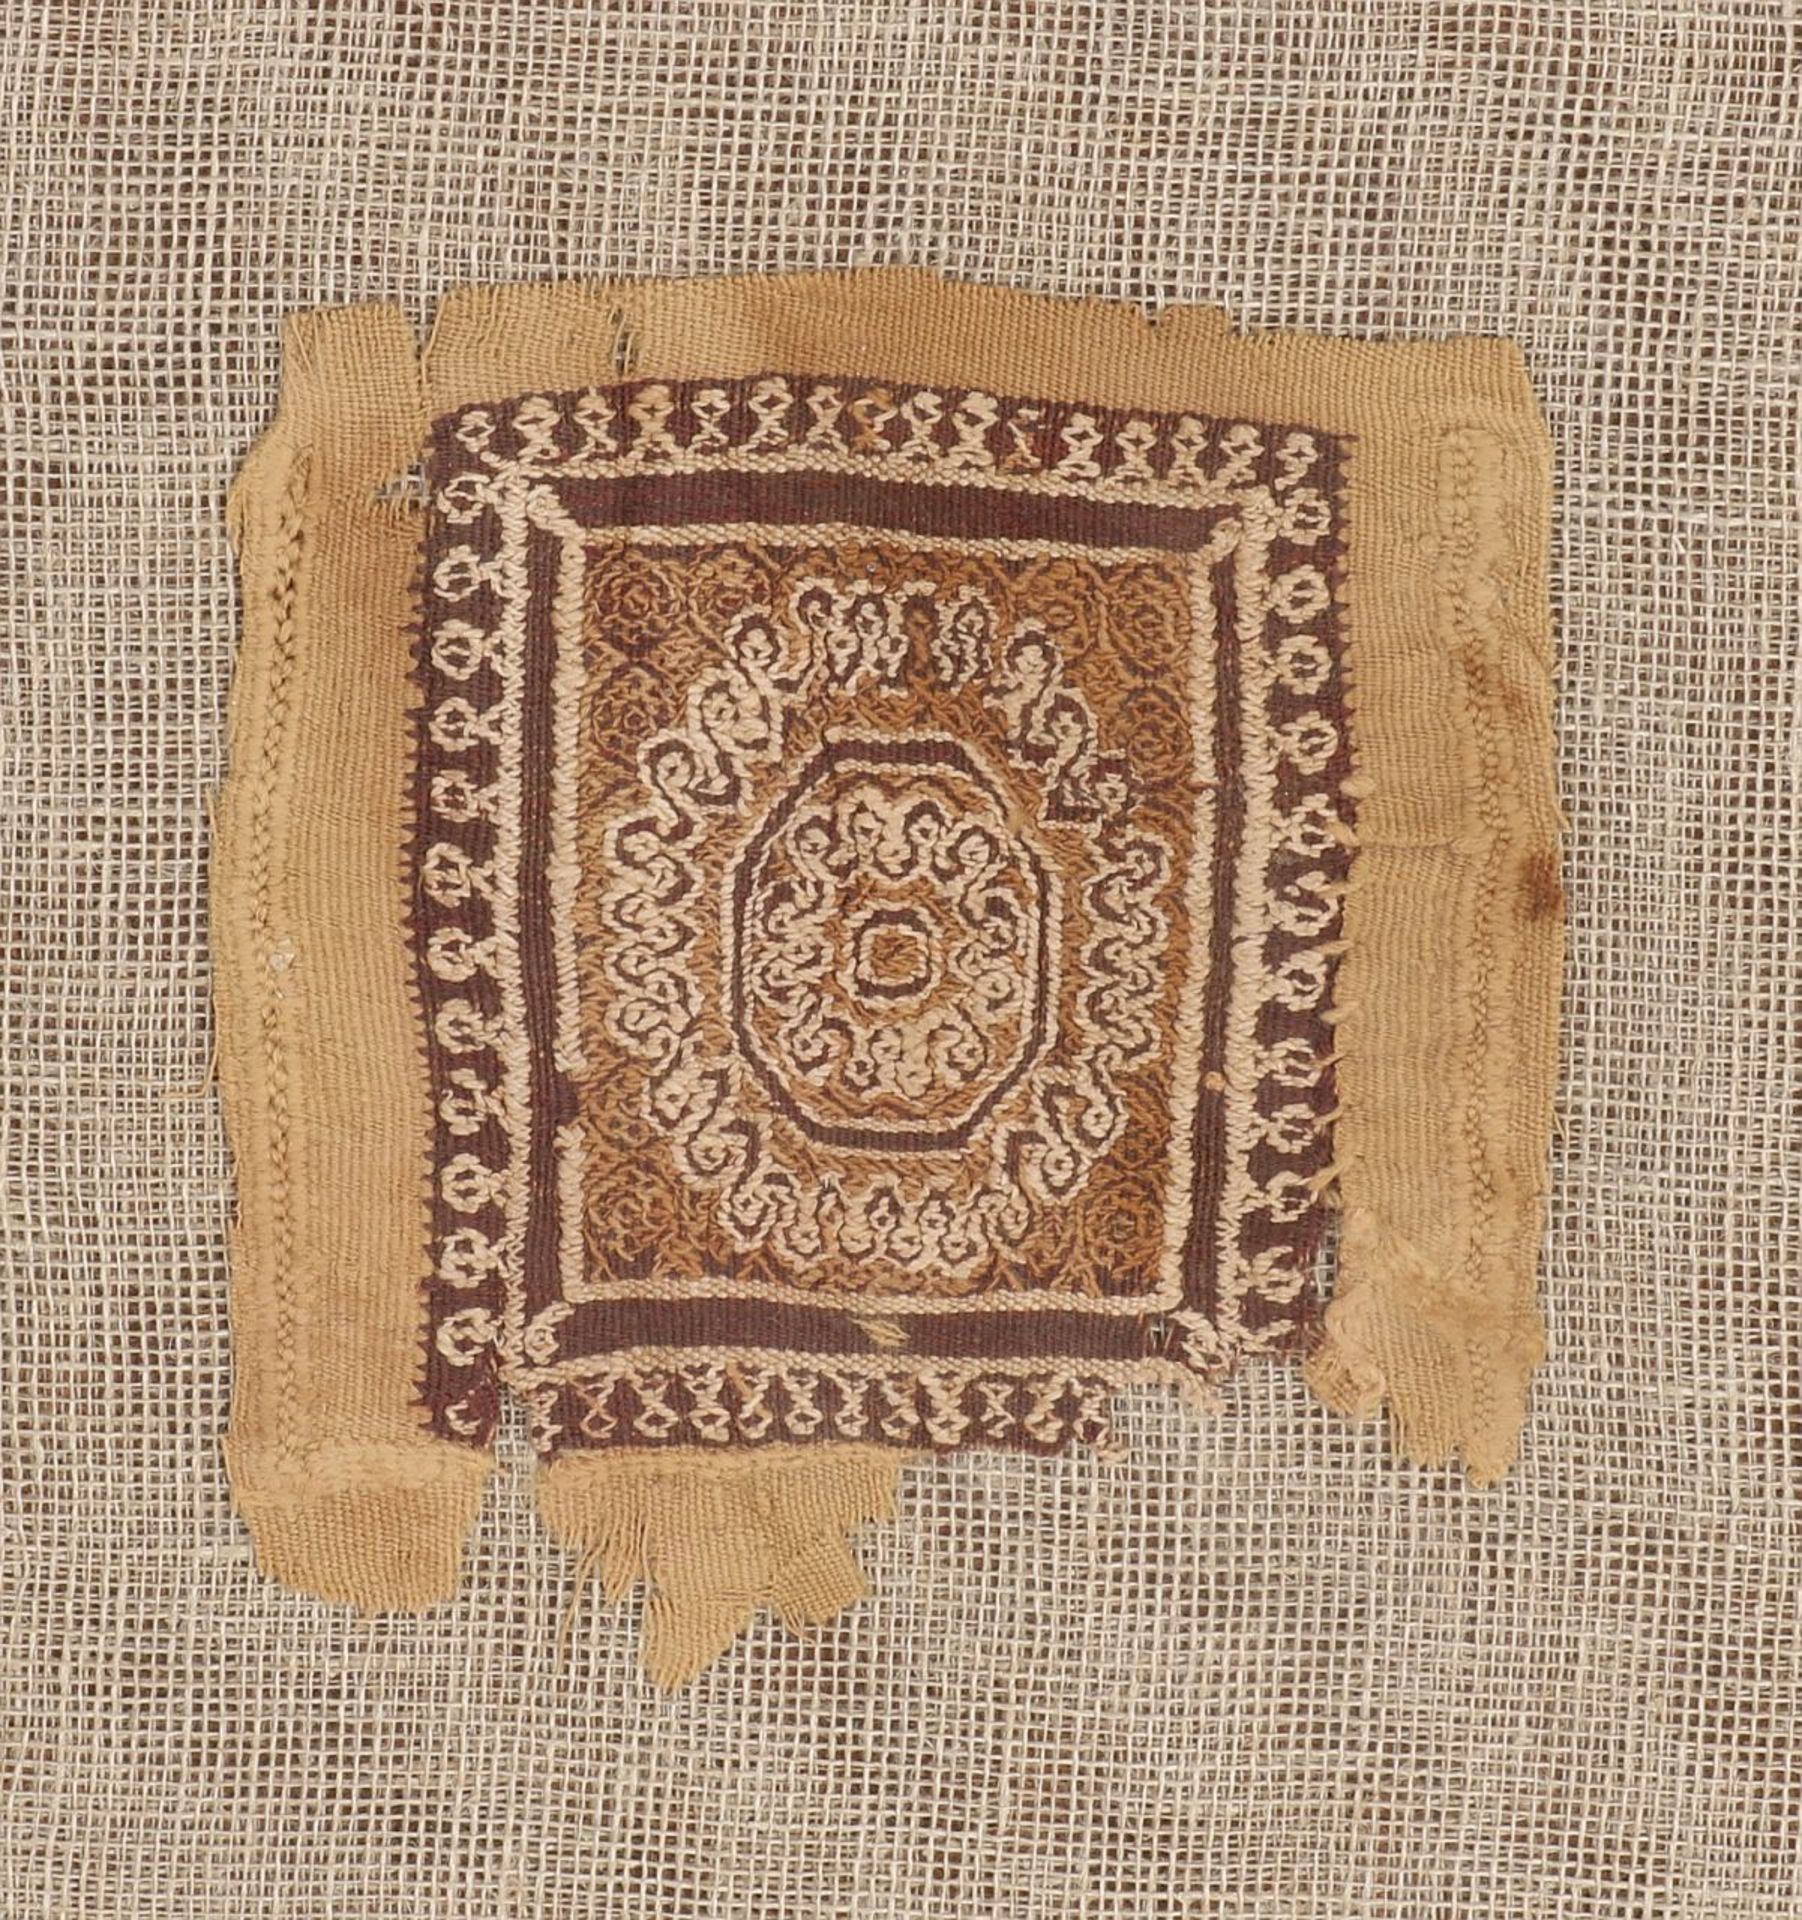 Antique Coptic tissue fragment in frame - Image 2 of 2